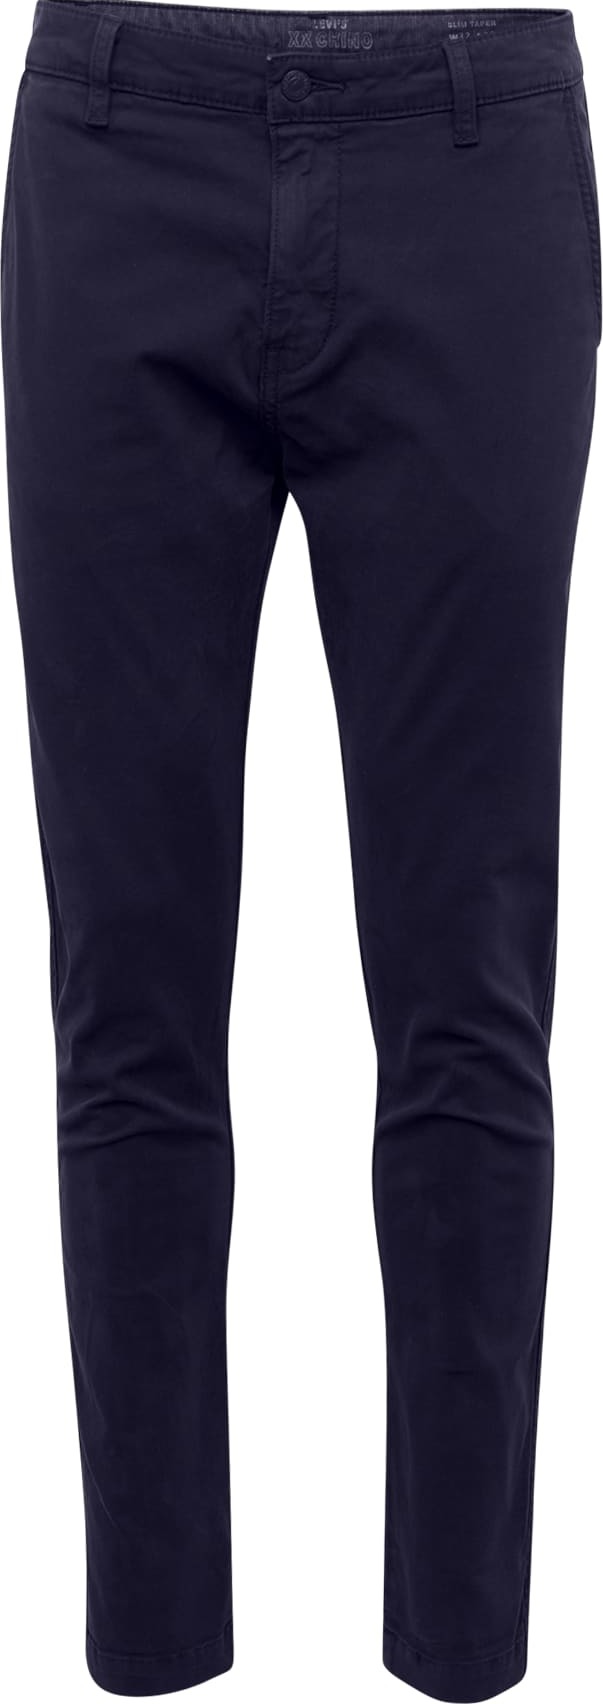 LEVI'S Chino kalhoty 'SLIM TAPER CHINO II' námořnická modř